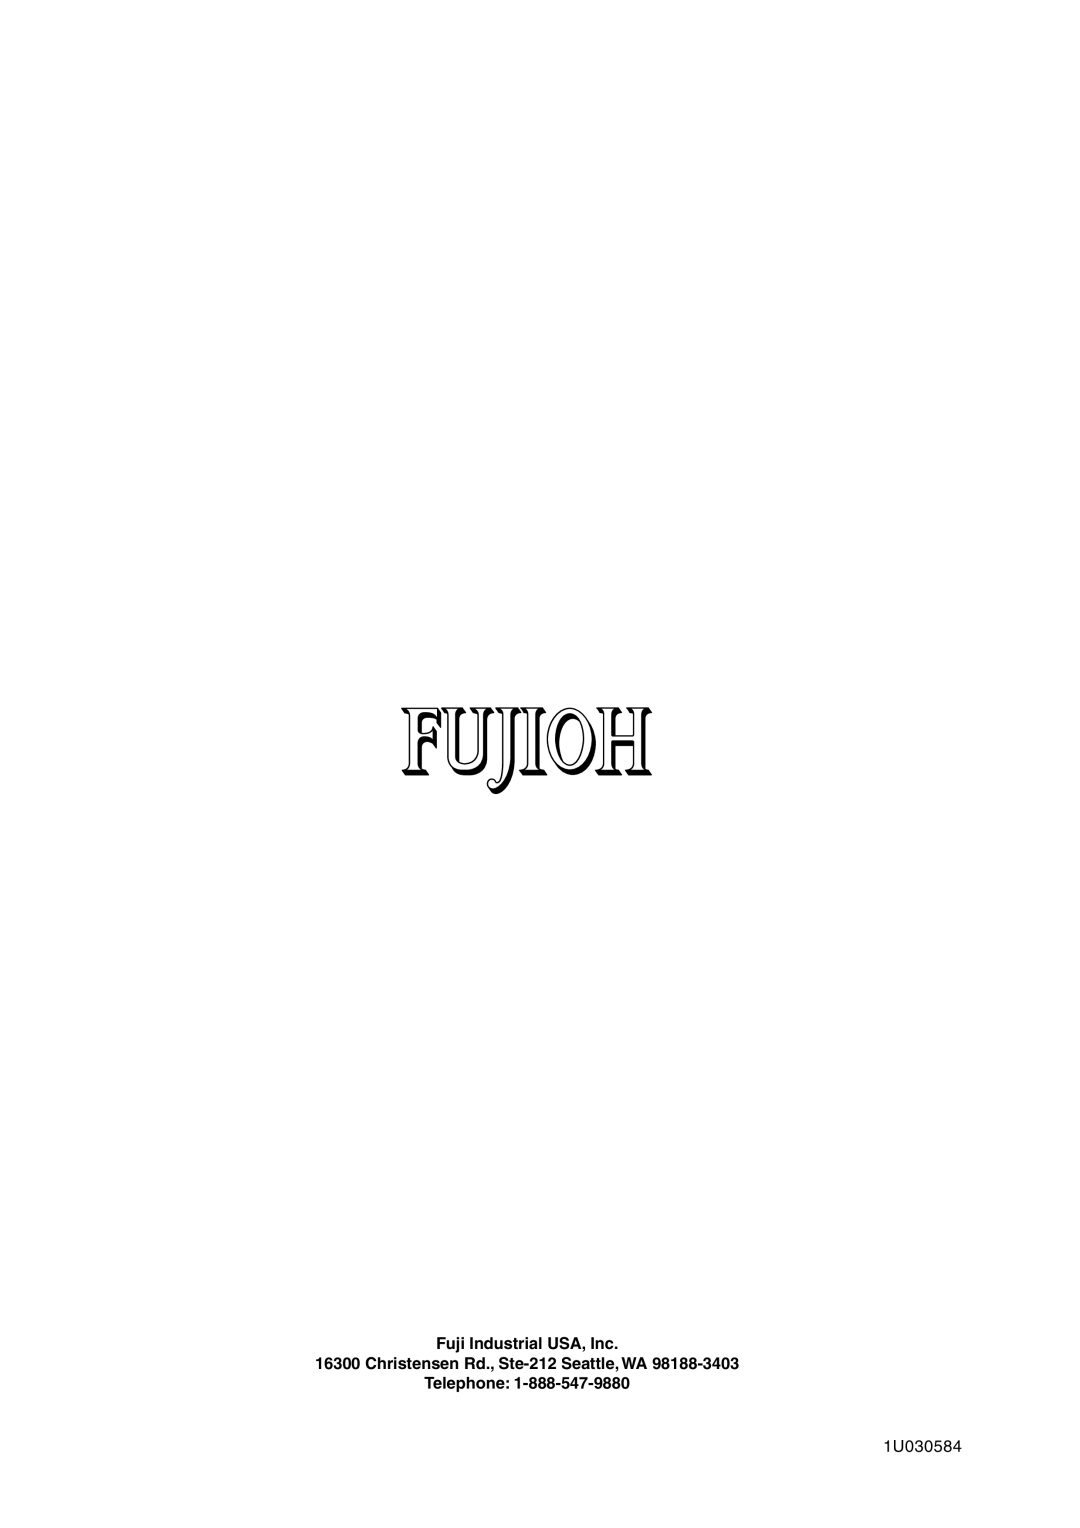 Fujioh BUF-02, BUF-01 Fuji Industrial USA, Inc 16300 Christensen Rd., Ste-212 Seattle, WA, Telephone, 1U030584 